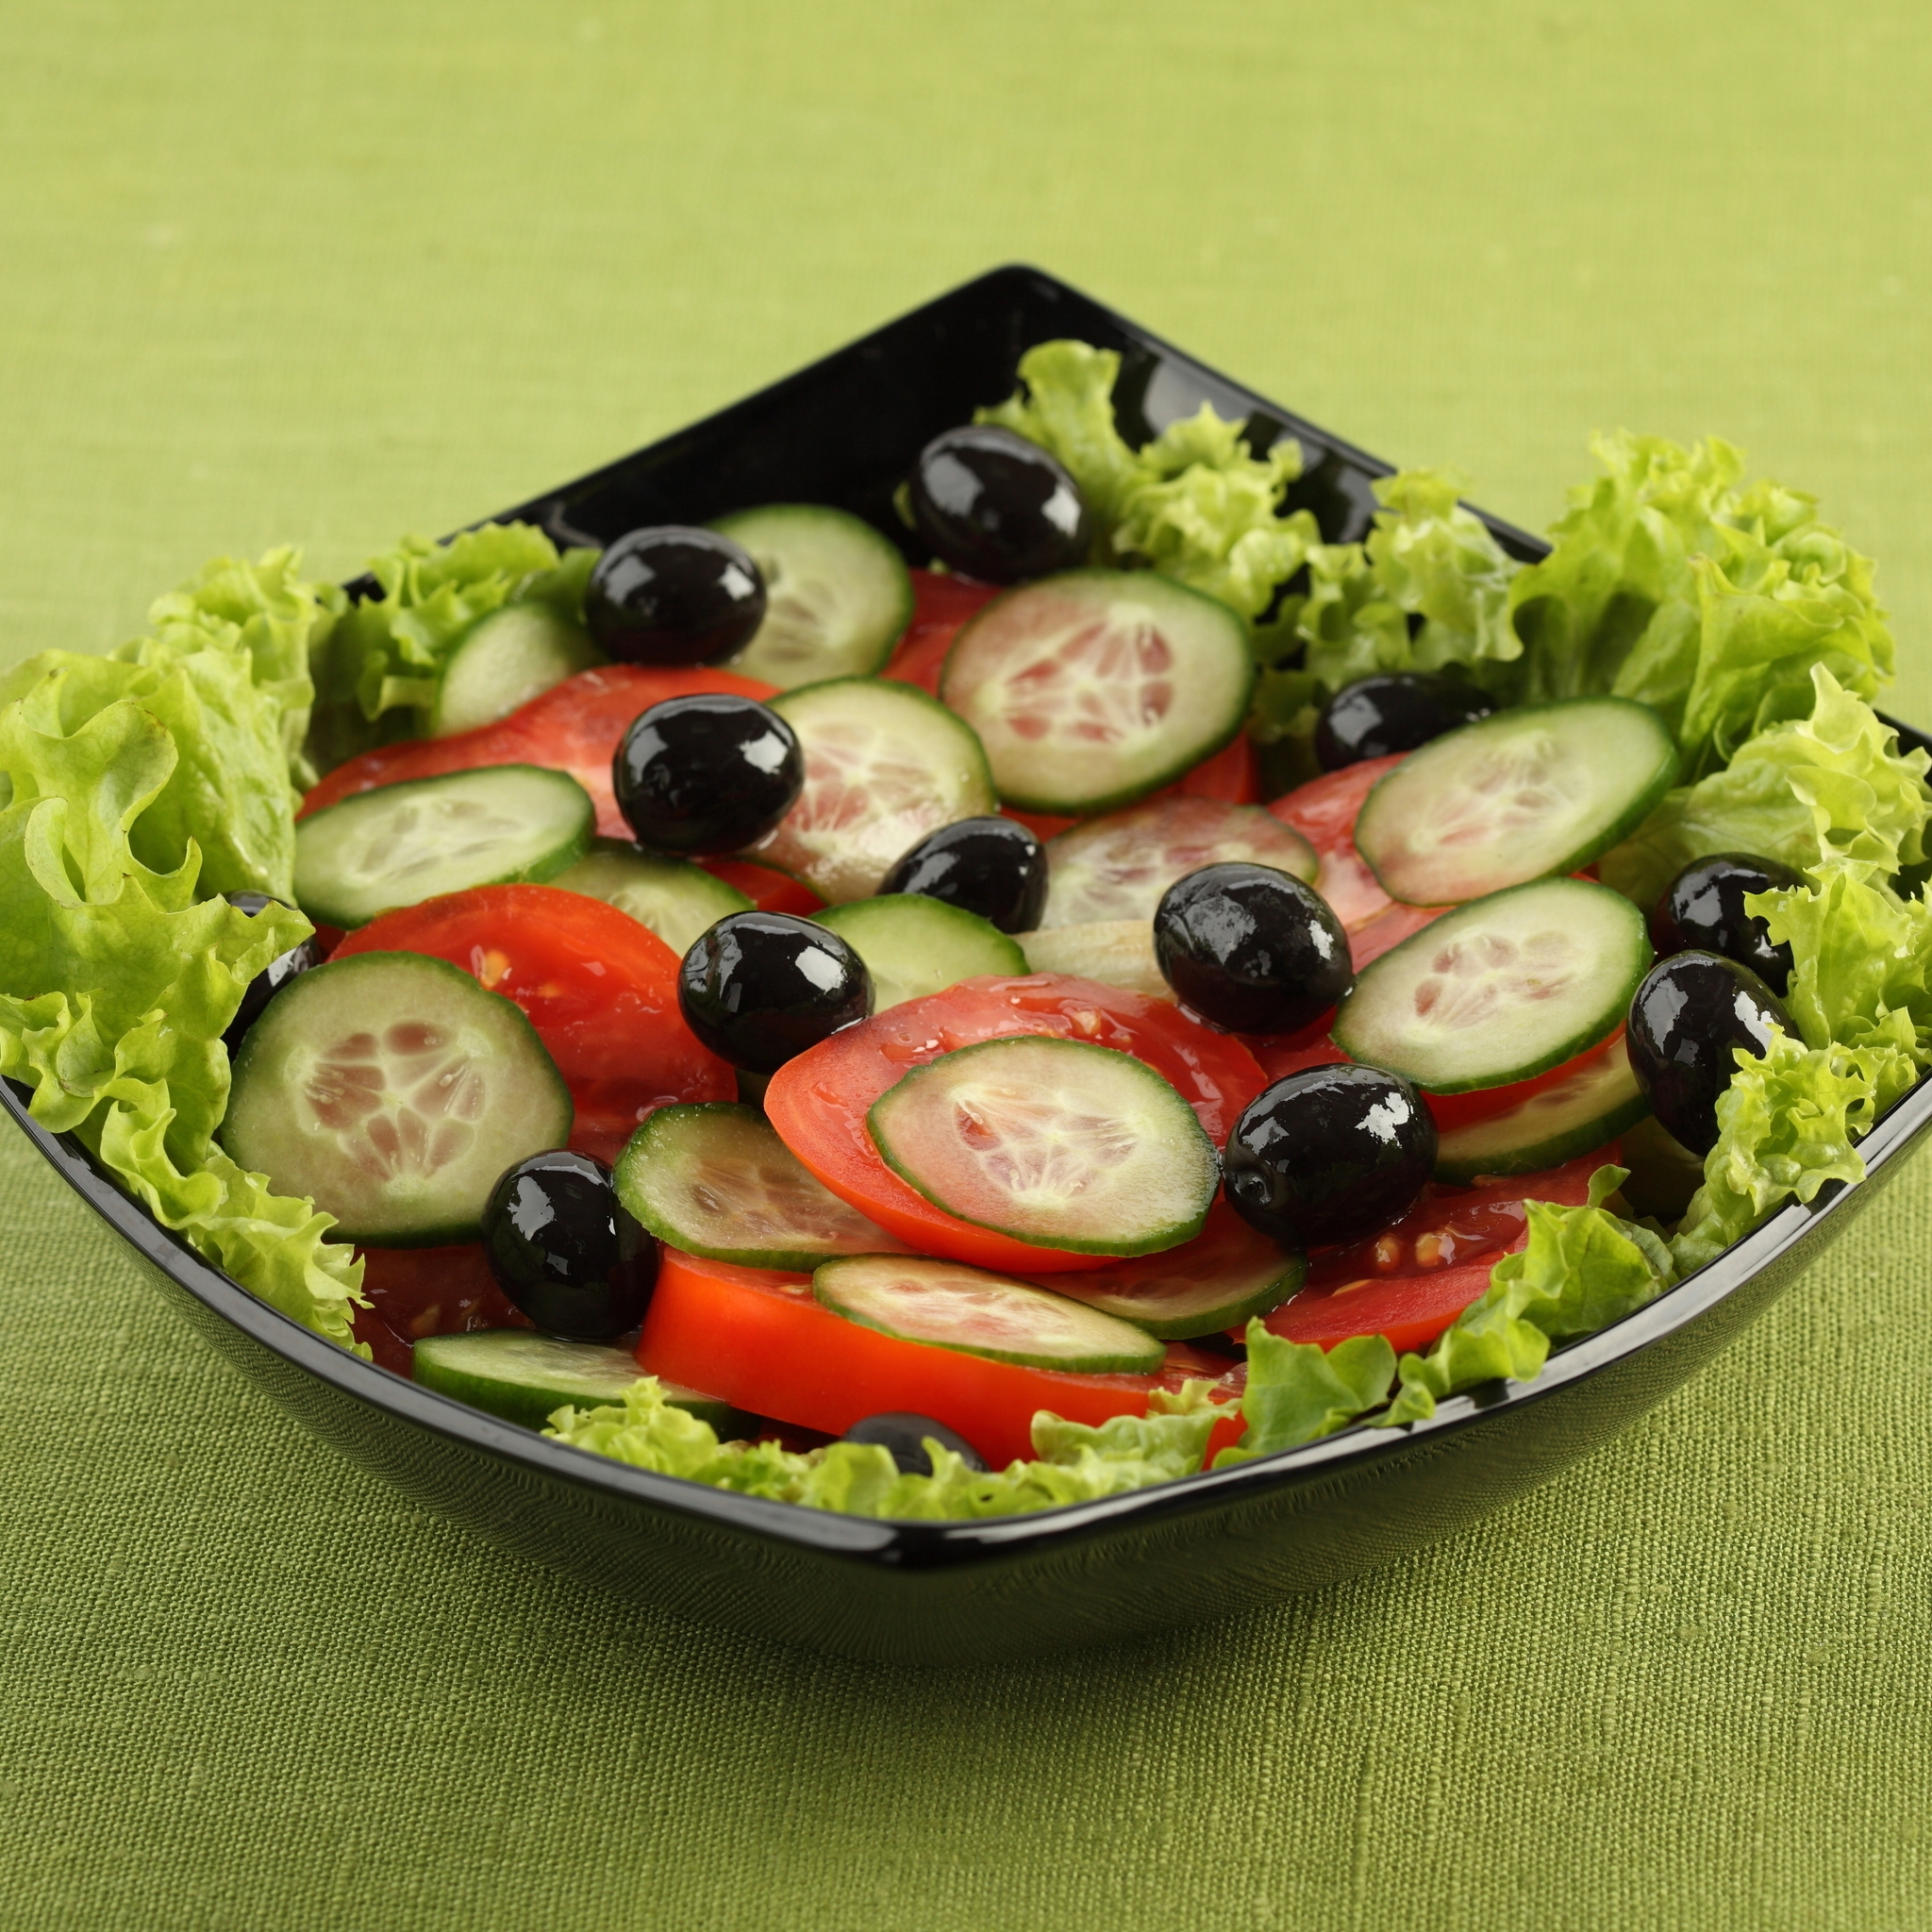 Summer Healthy Salad for 2048 x 2048 New iPad resolution